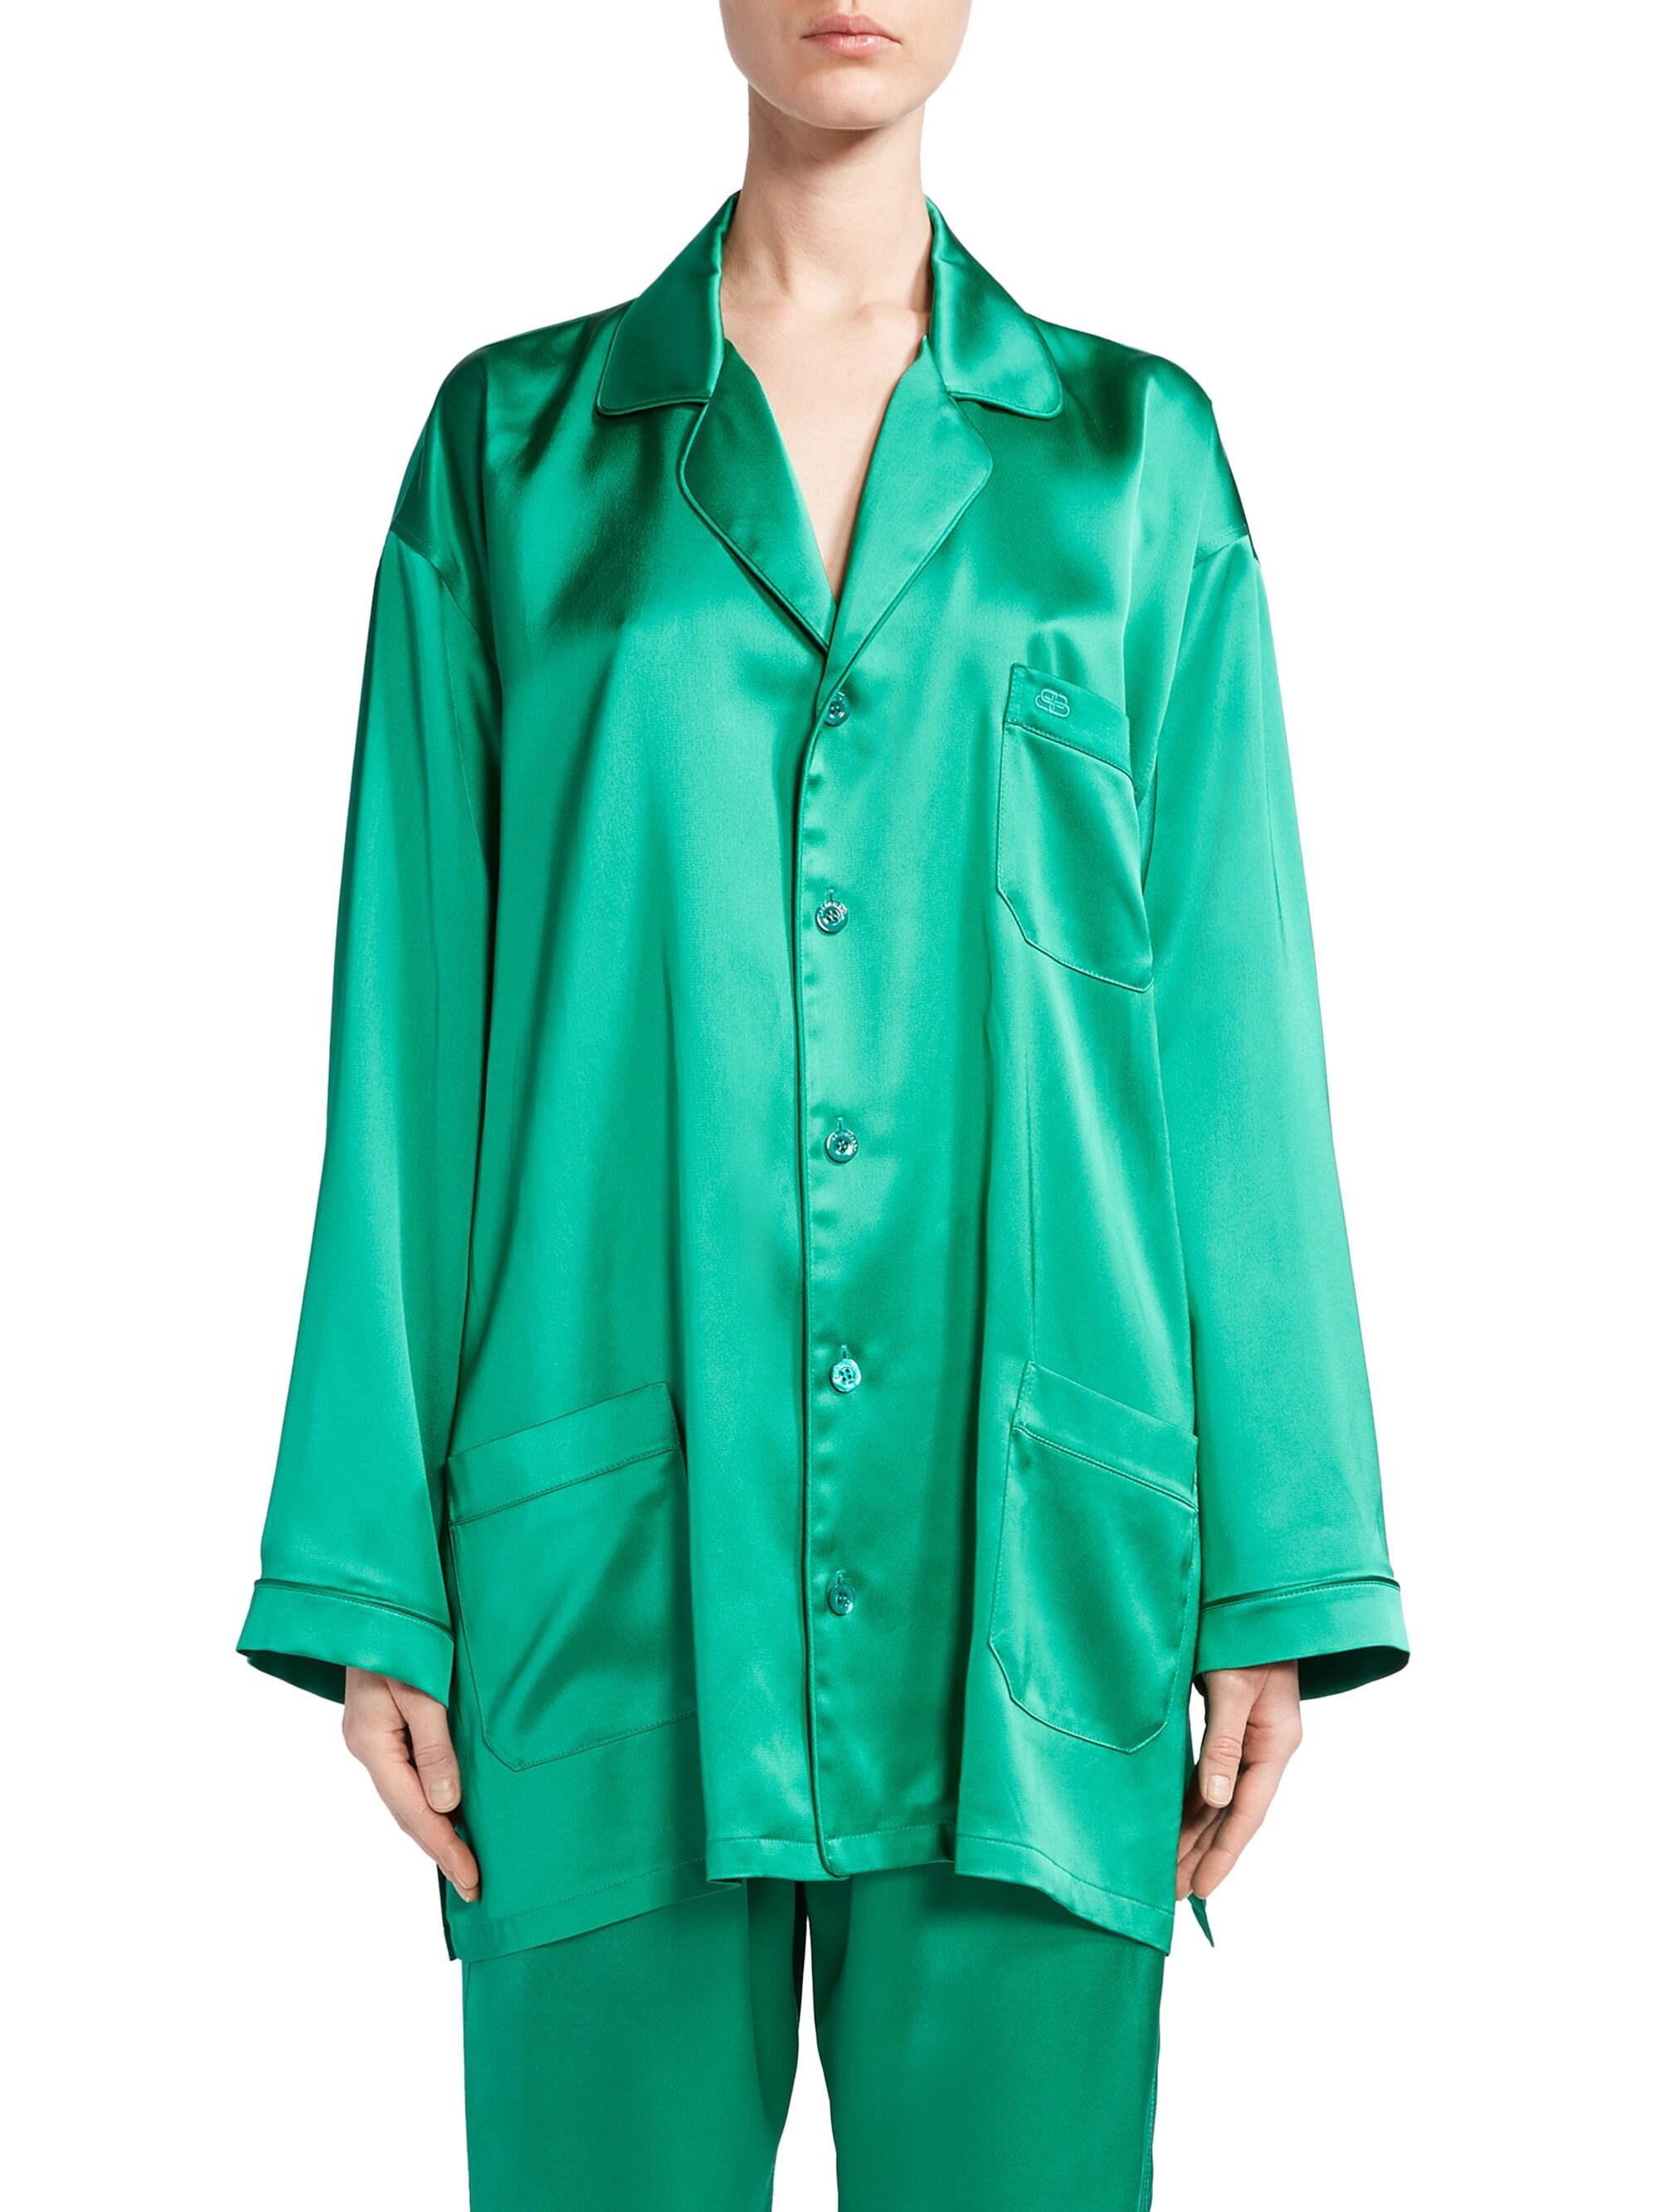 Balenciaga Satin Pajama Top in Green - Lyst